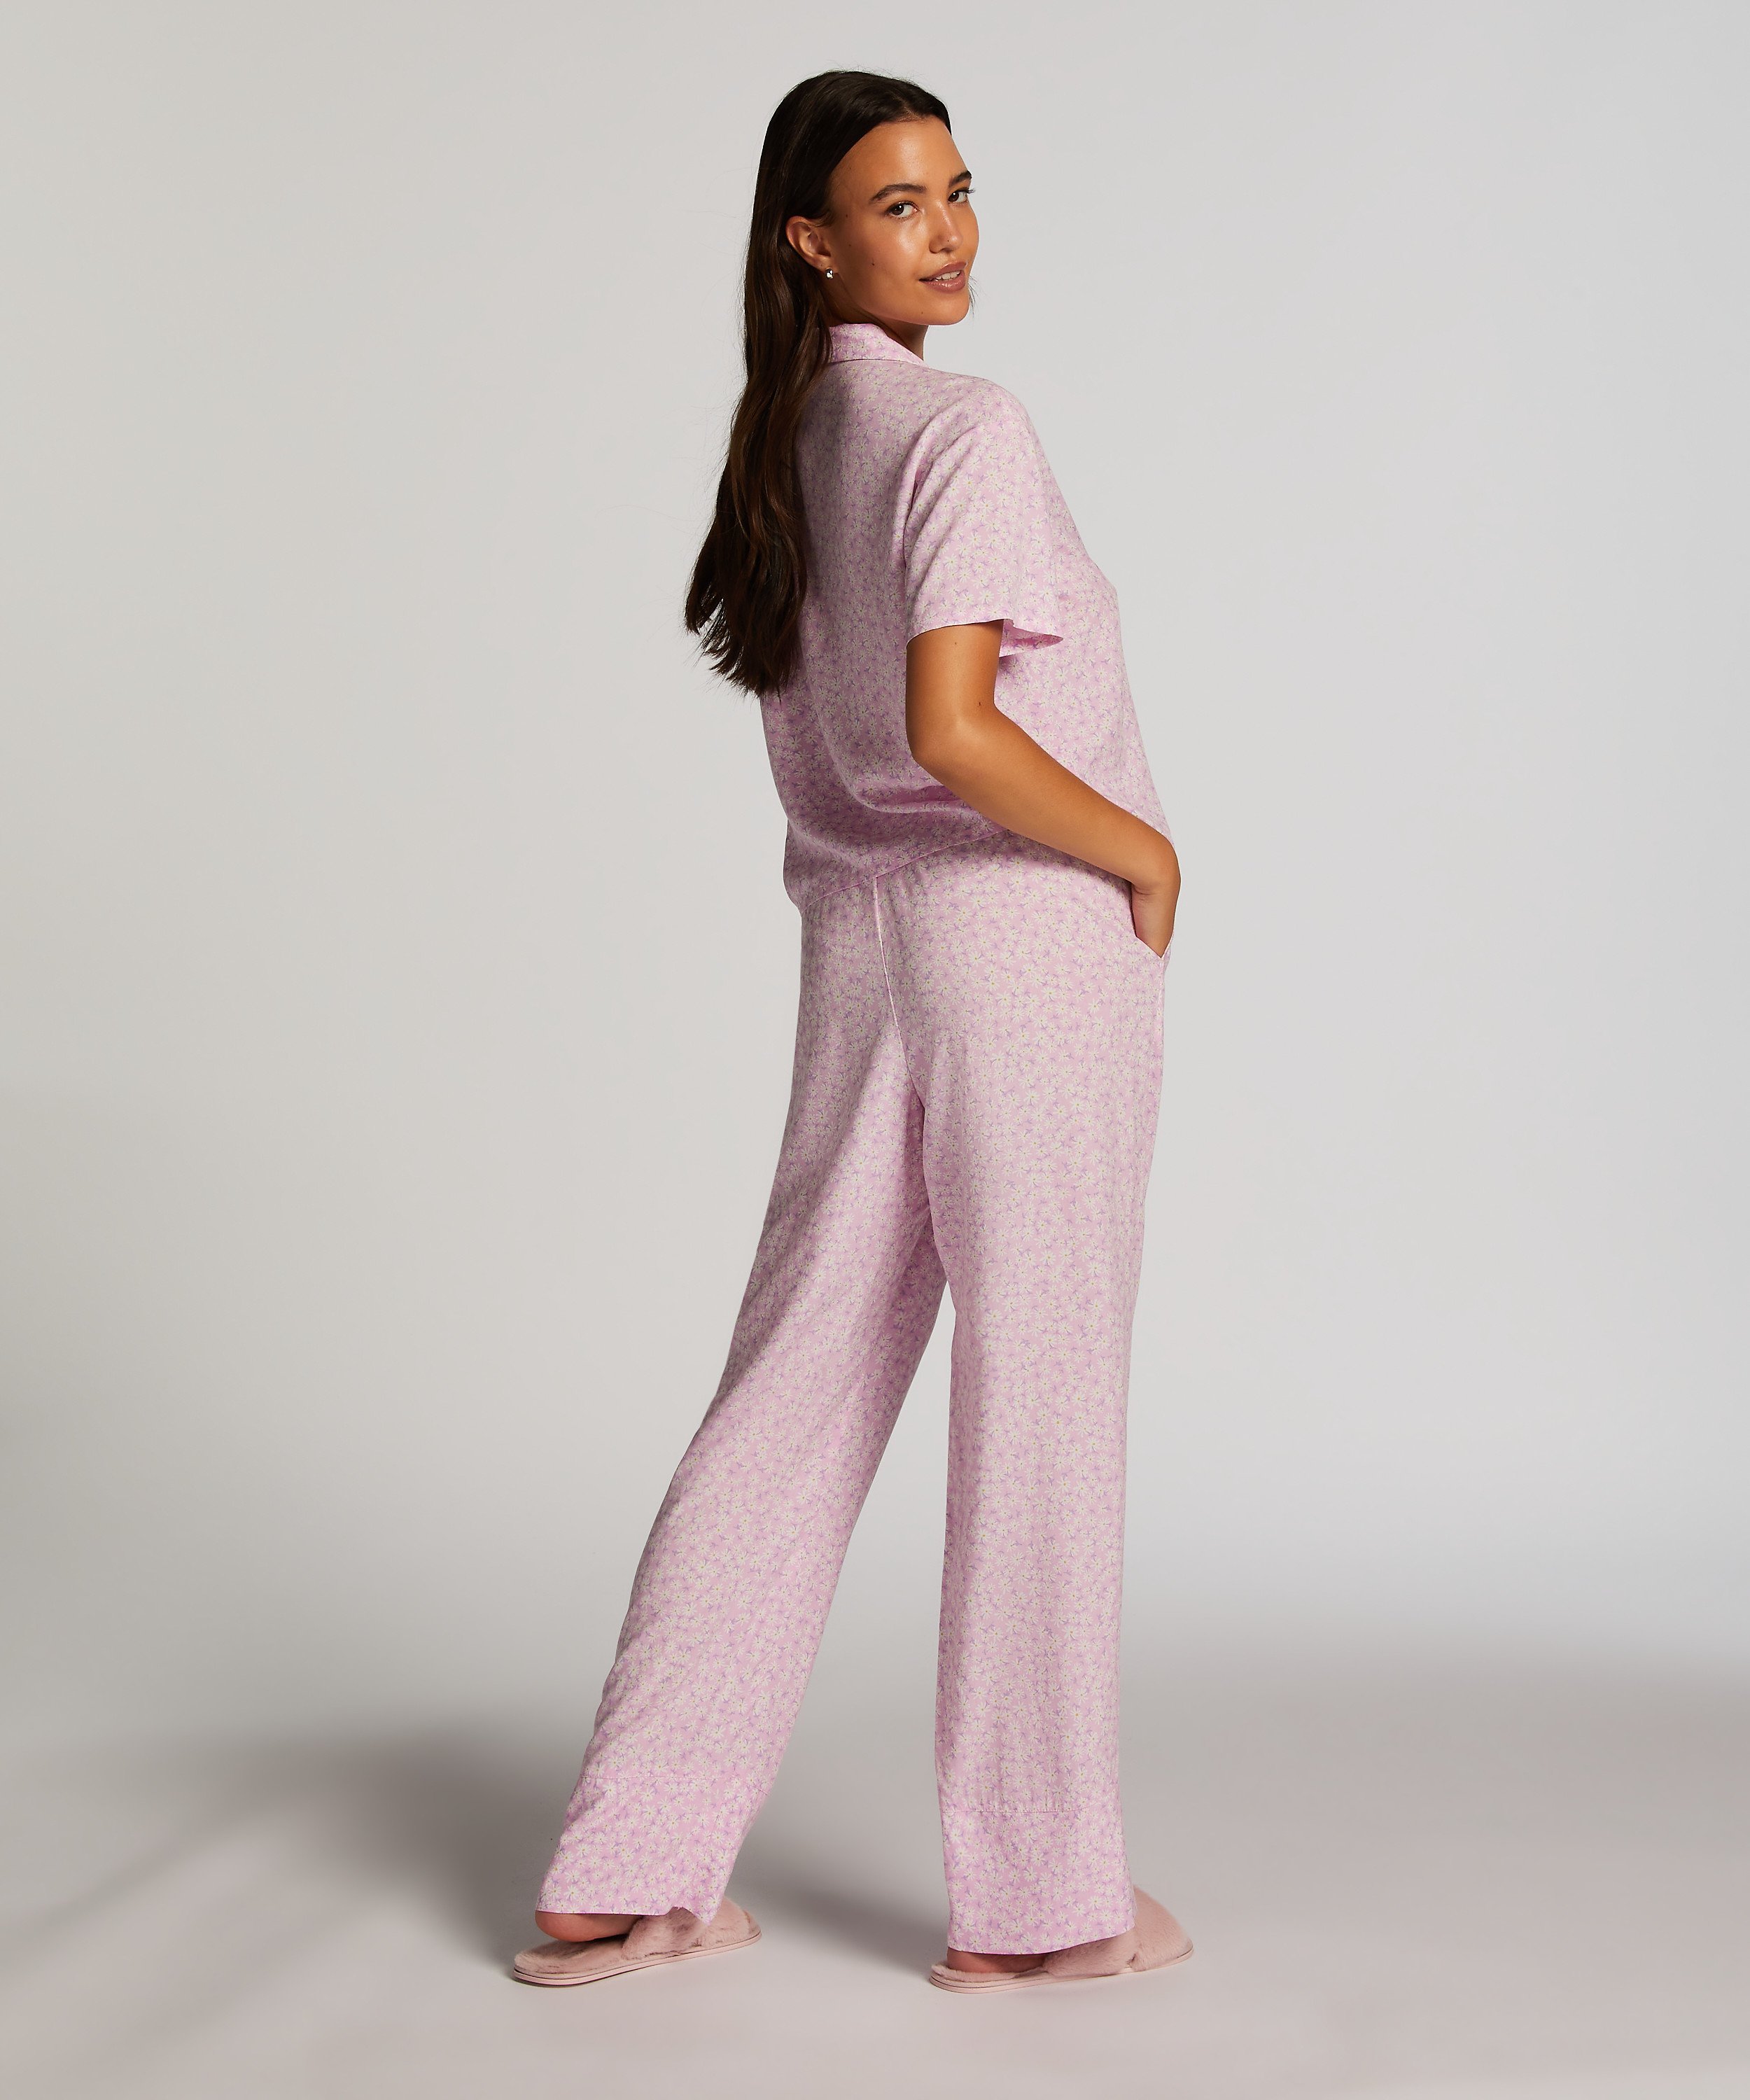 Springbreakers Woven Pyjama Bottoms, Pink, main